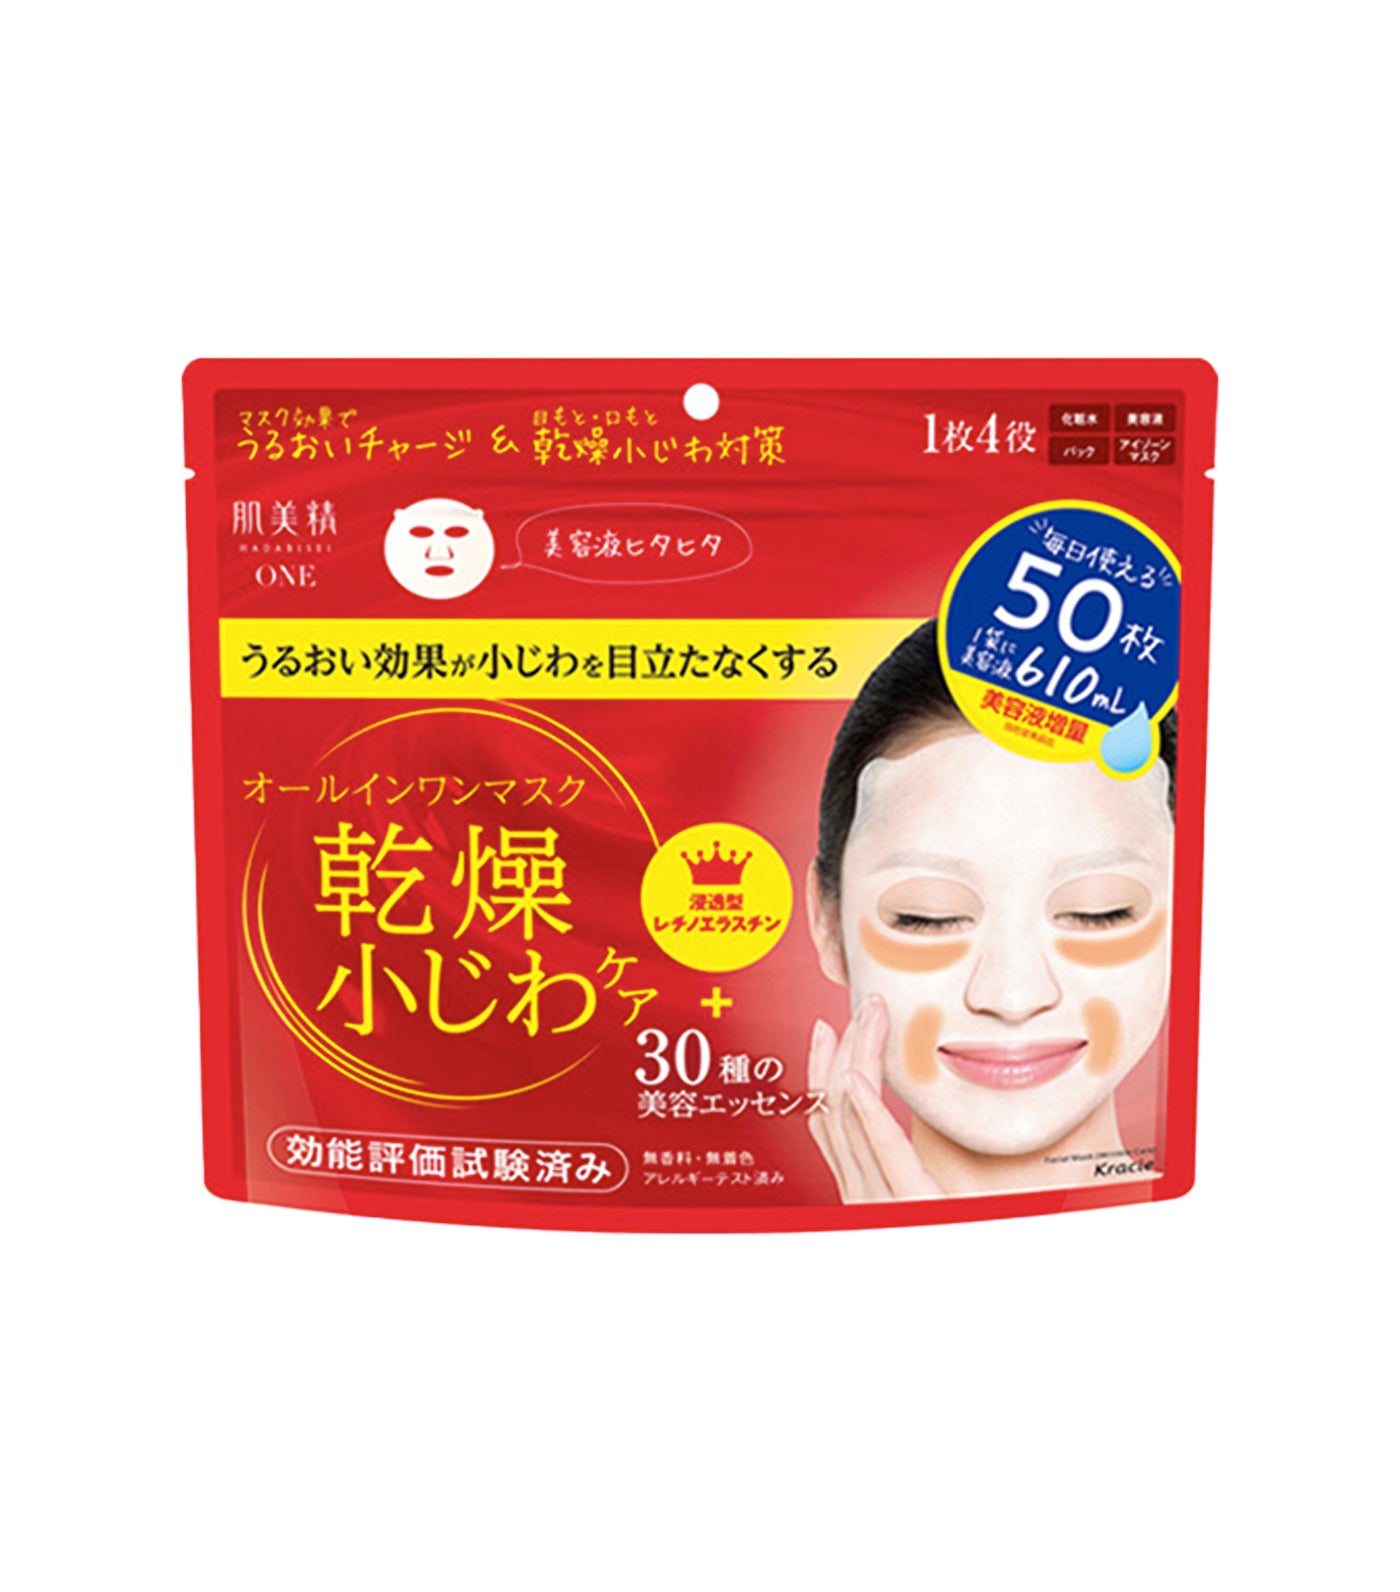 Wrinkle Care Face Mask - 50 Sheets